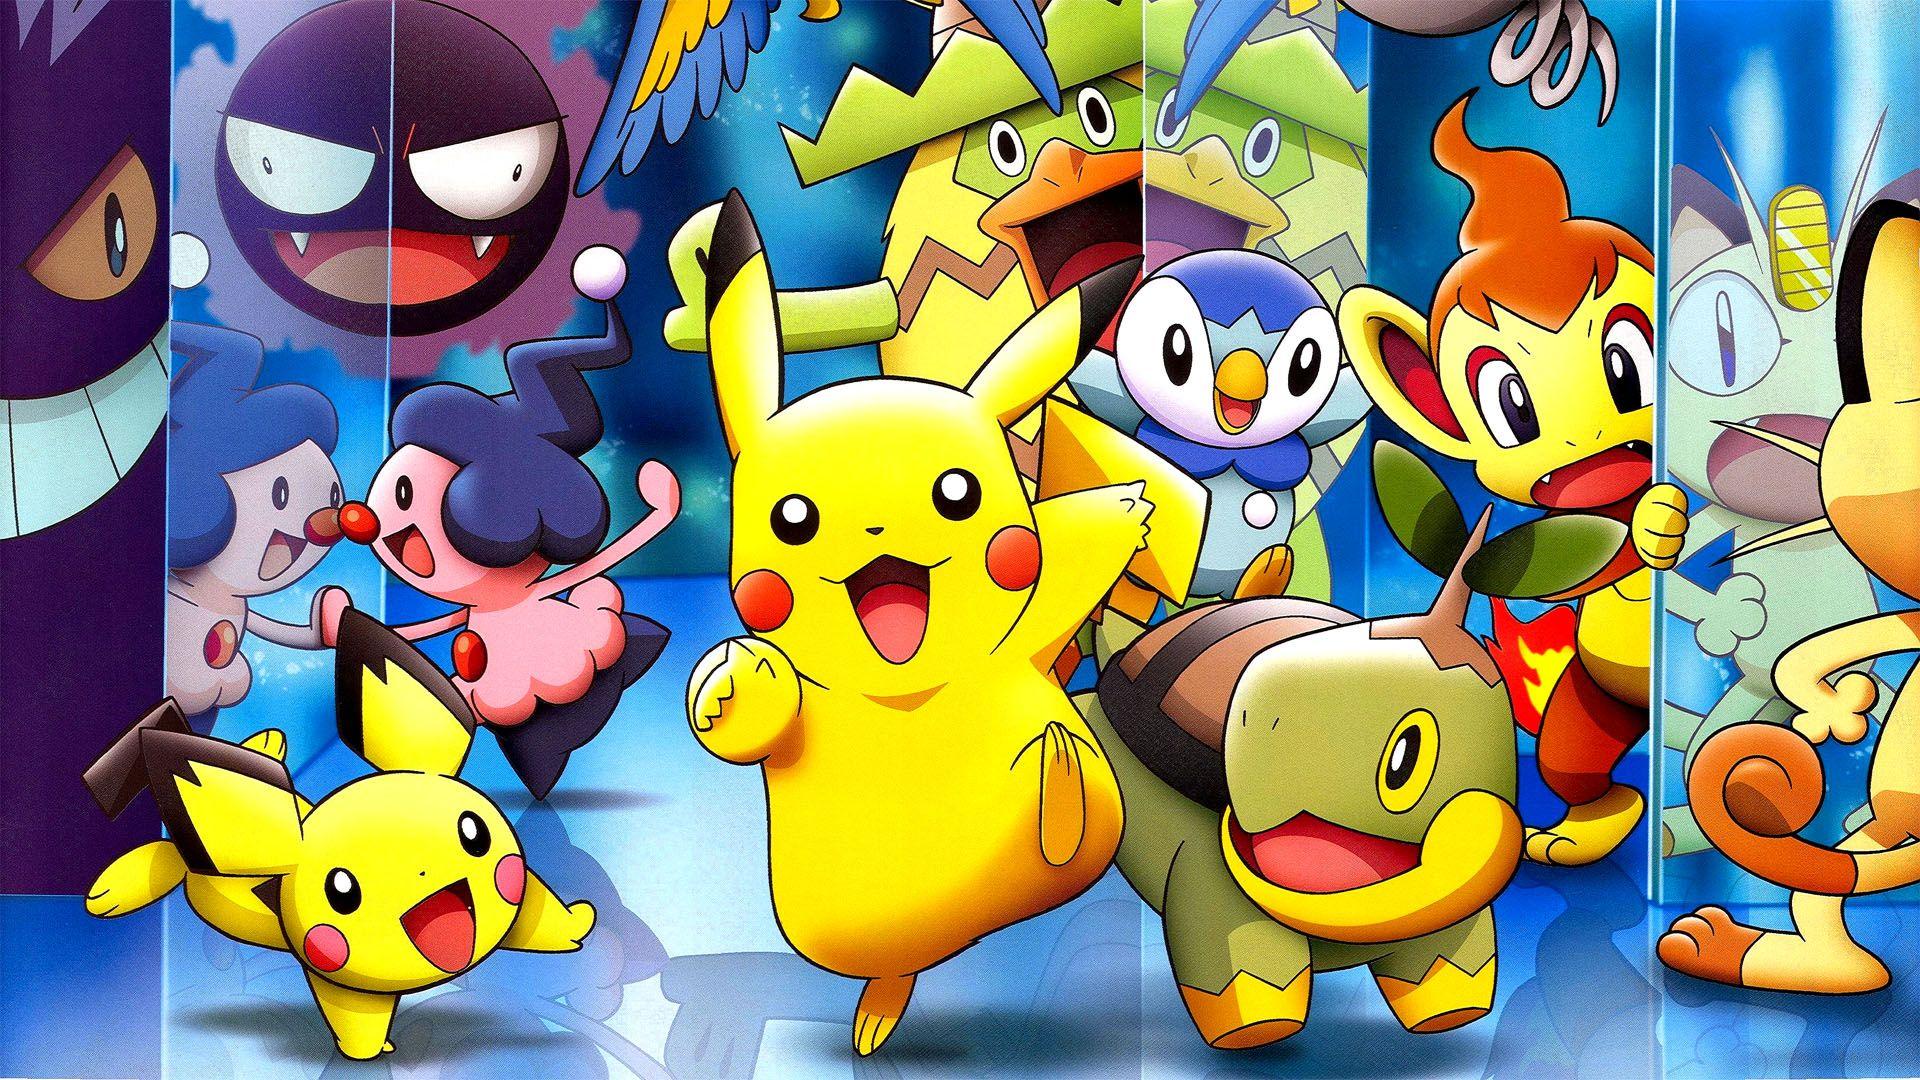 Legendary Developing Third Live Action Pokémon Movie Based On